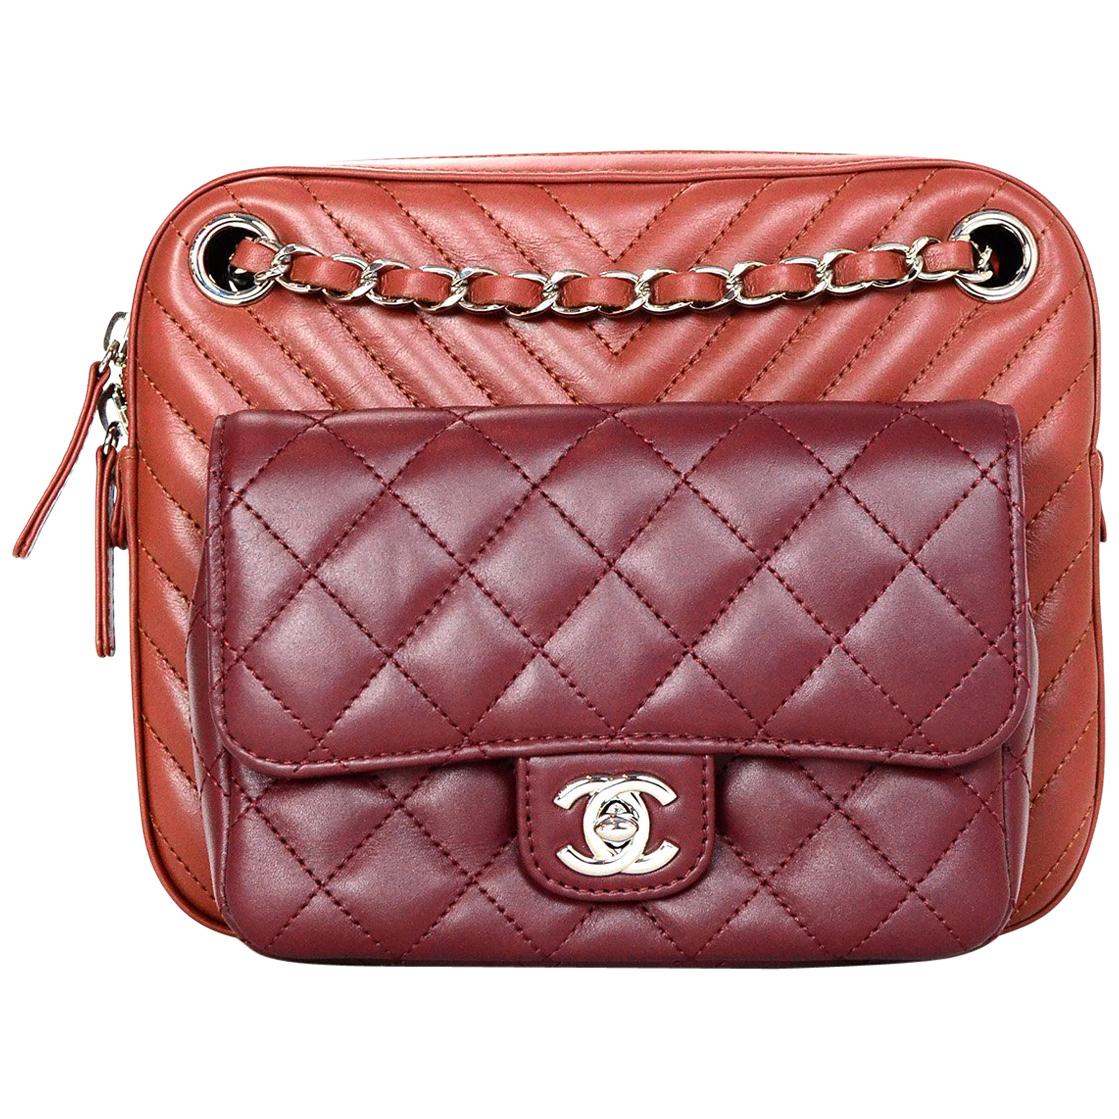 Chanel '18 Burgundy/Brick Chevron Quilted Camera Crossbody Bag w Receipt